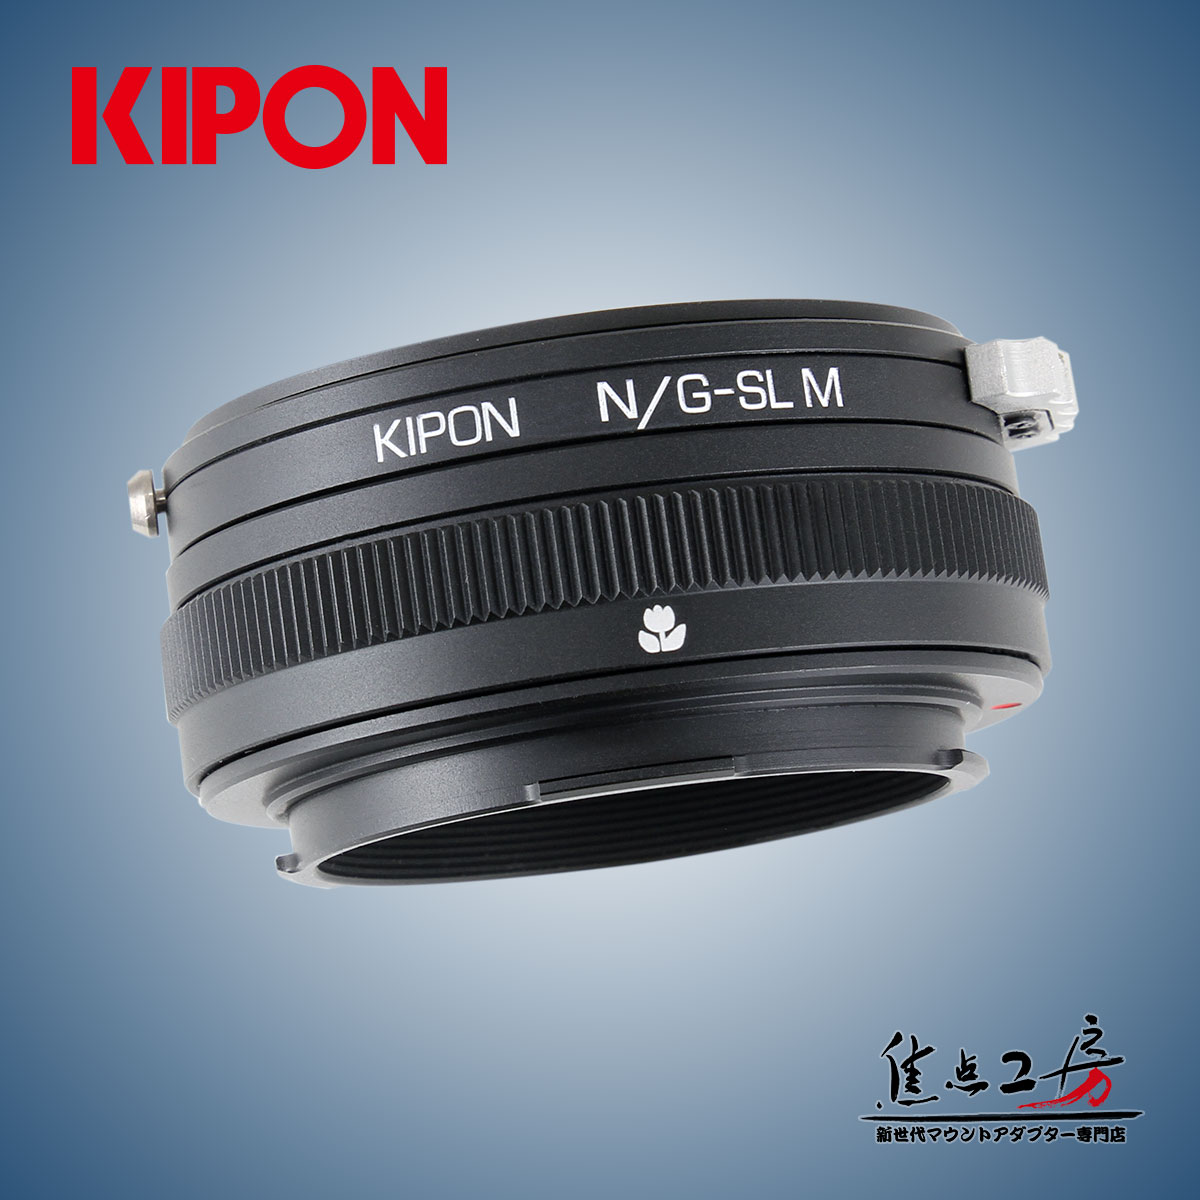 KIPON N／G-SL M ニコンFマウント／Gシリーズレンズ-ライカSLマウントカメラ マクロ／ヘリコイド付き